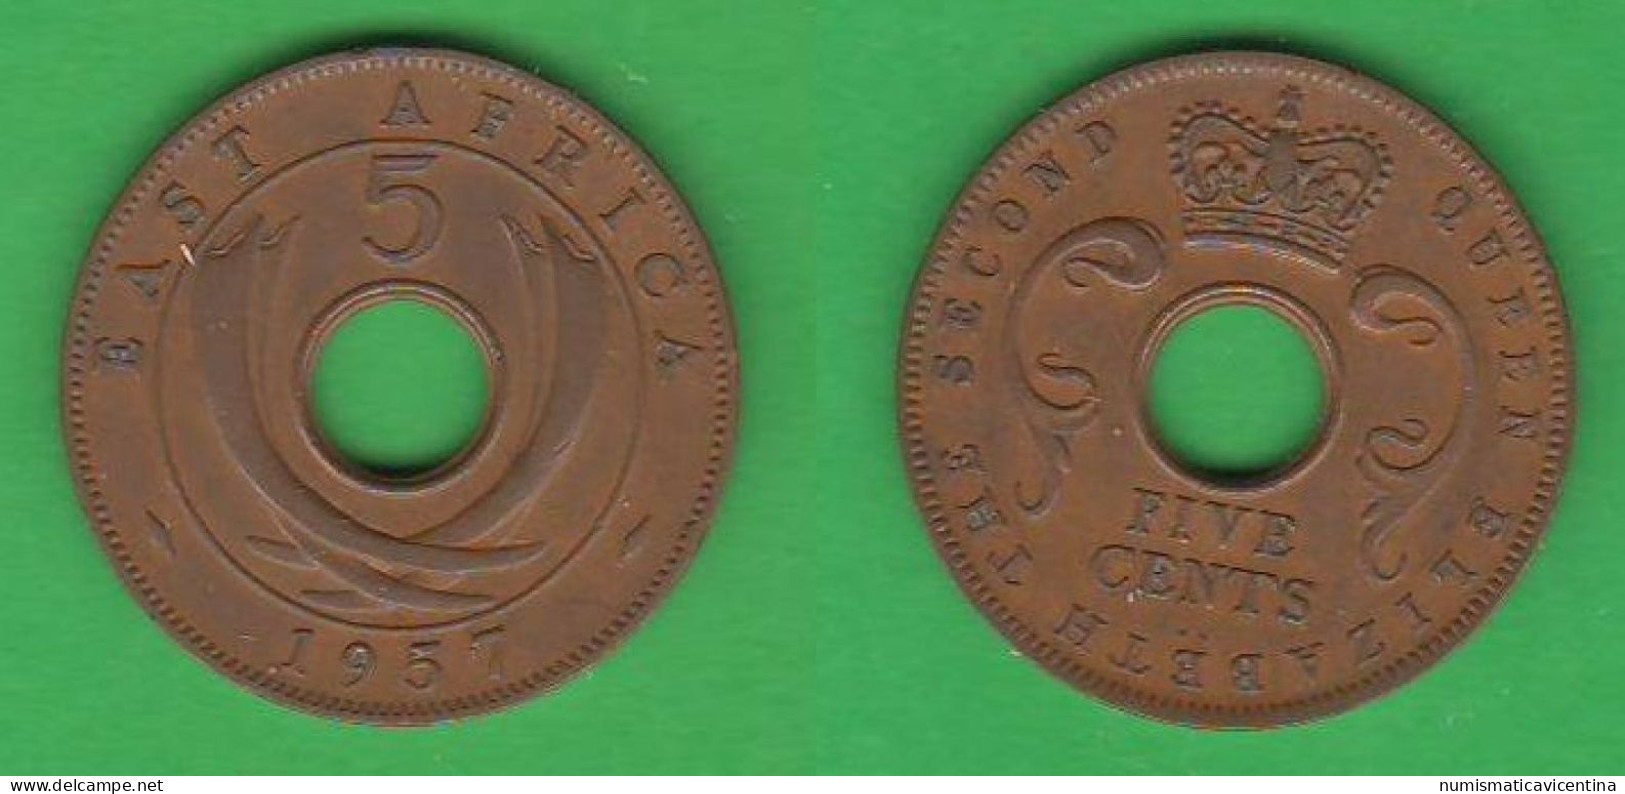 British East Africa 5 Cents 1957 KN Birmingham Mint Afrique Orientale Britannique - Colonia Británica